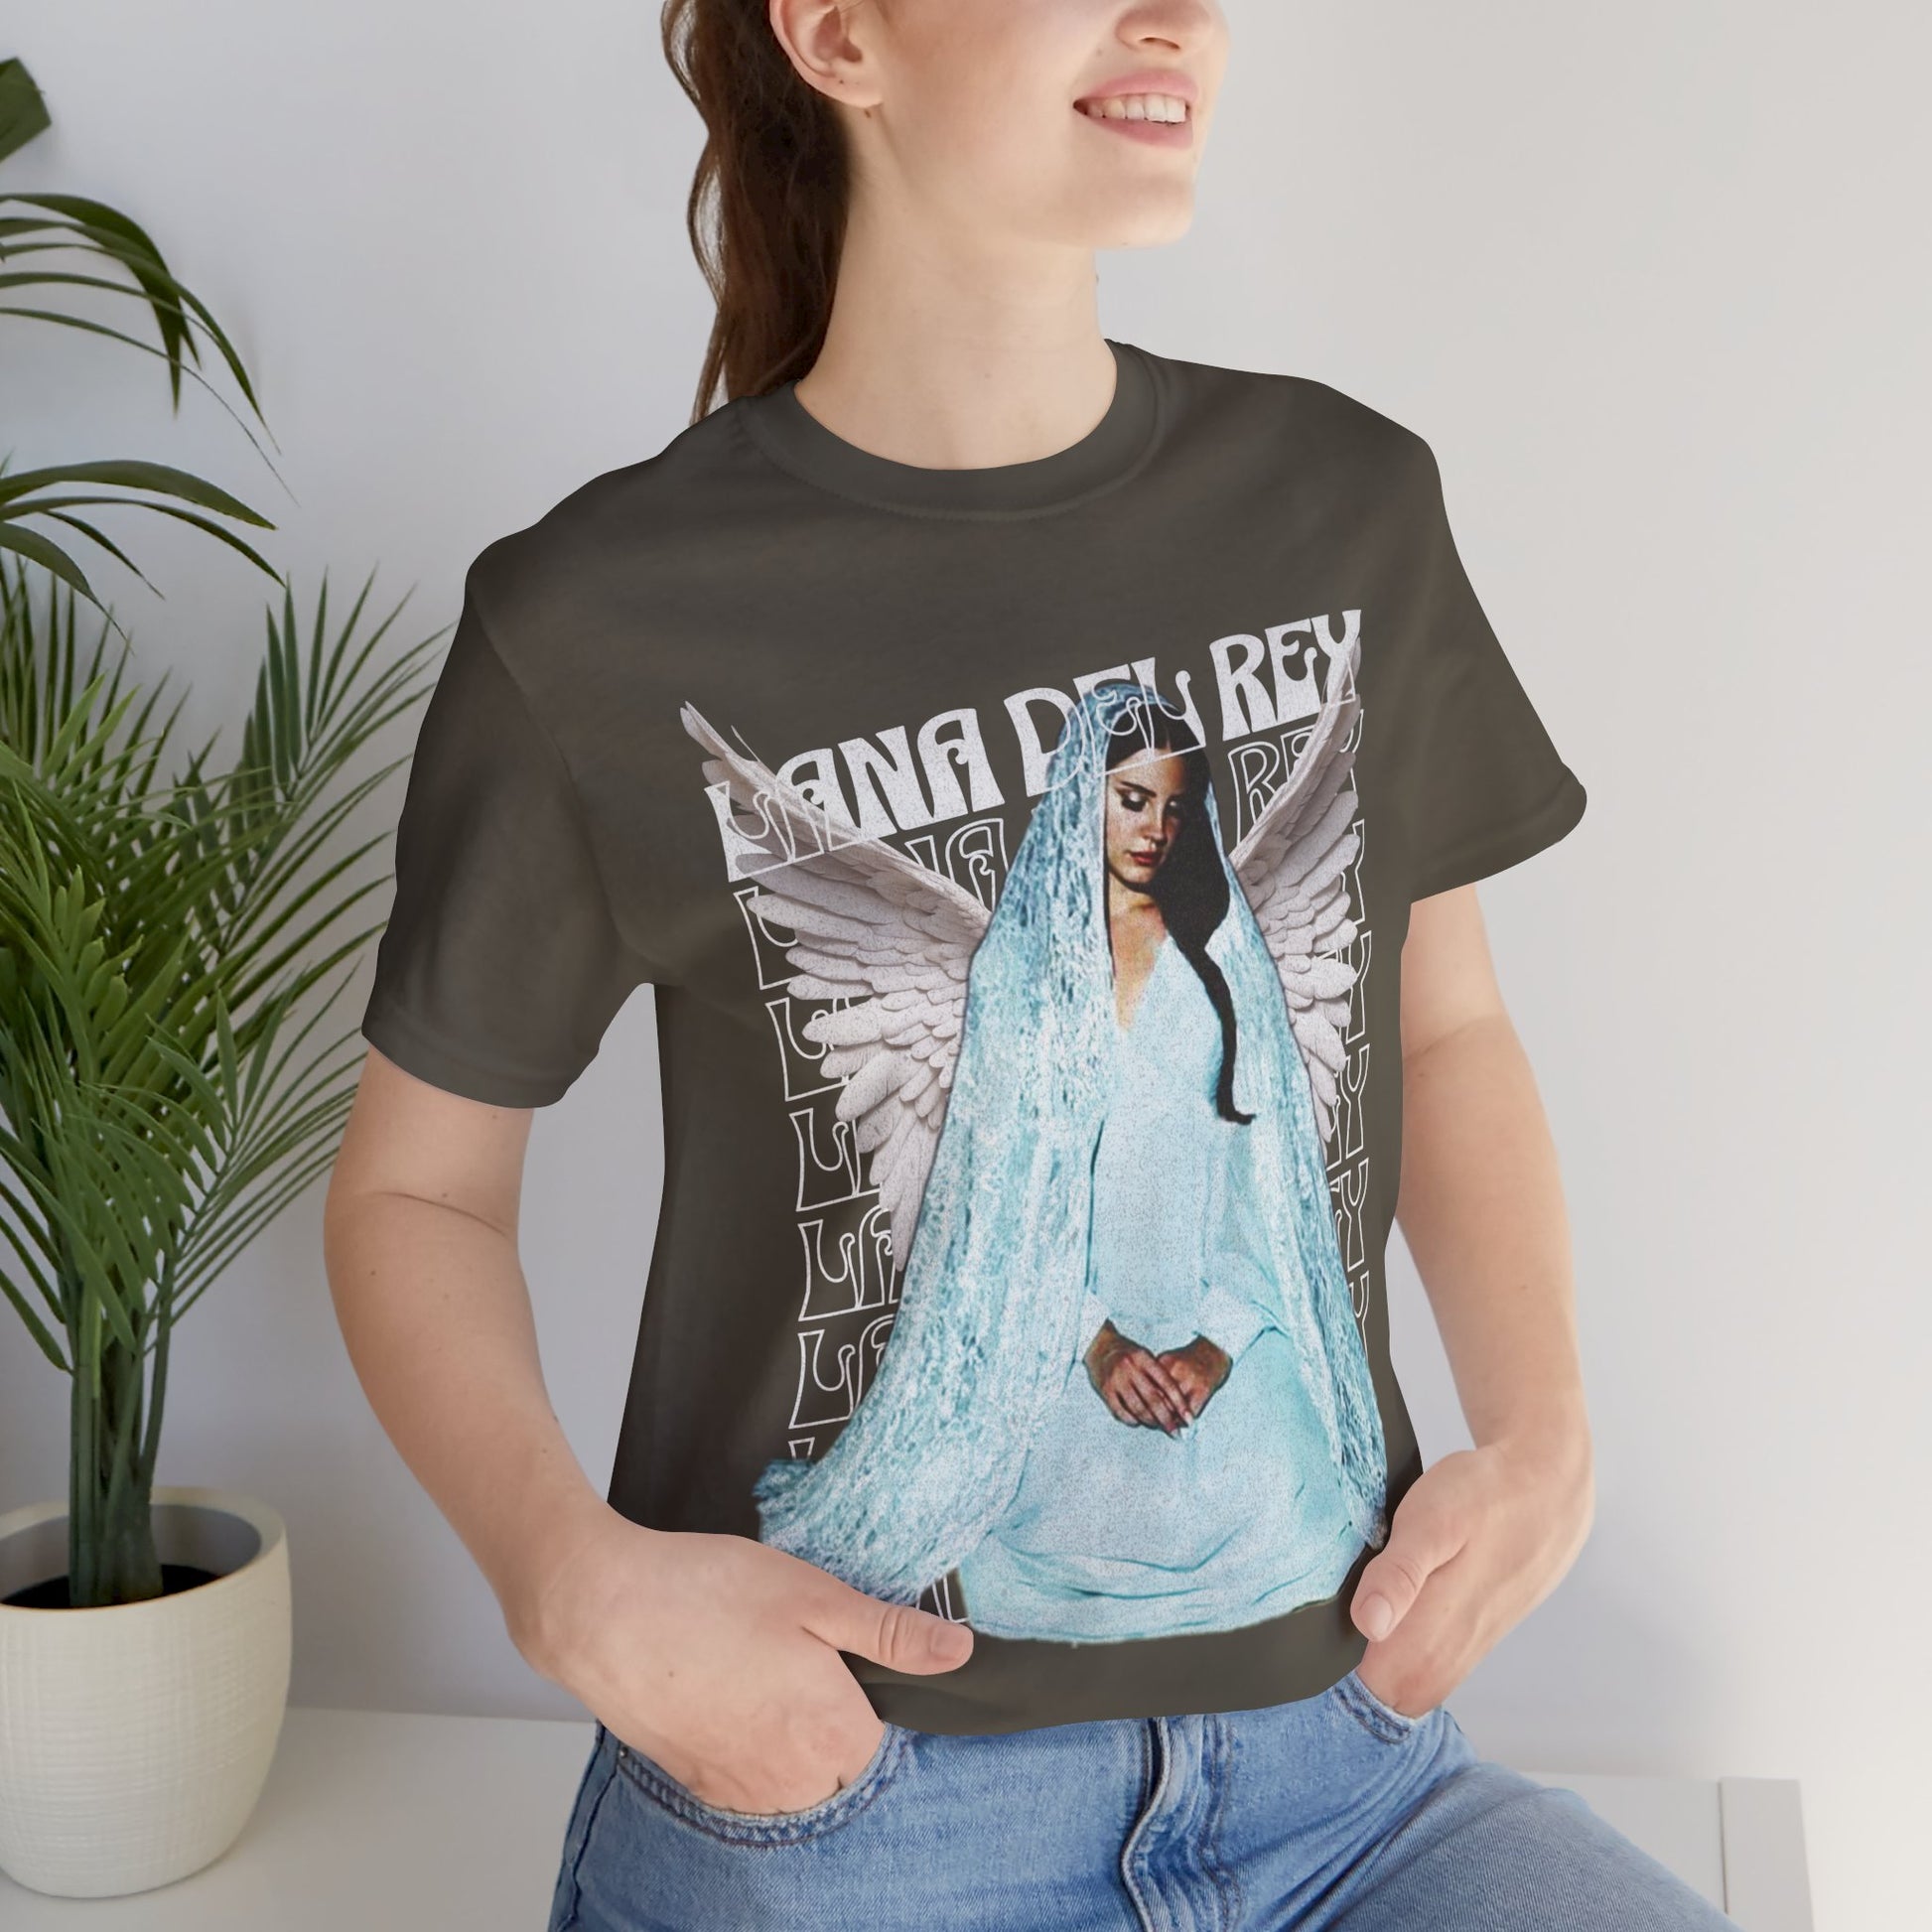 Lana Del Rey T-Shirt Army